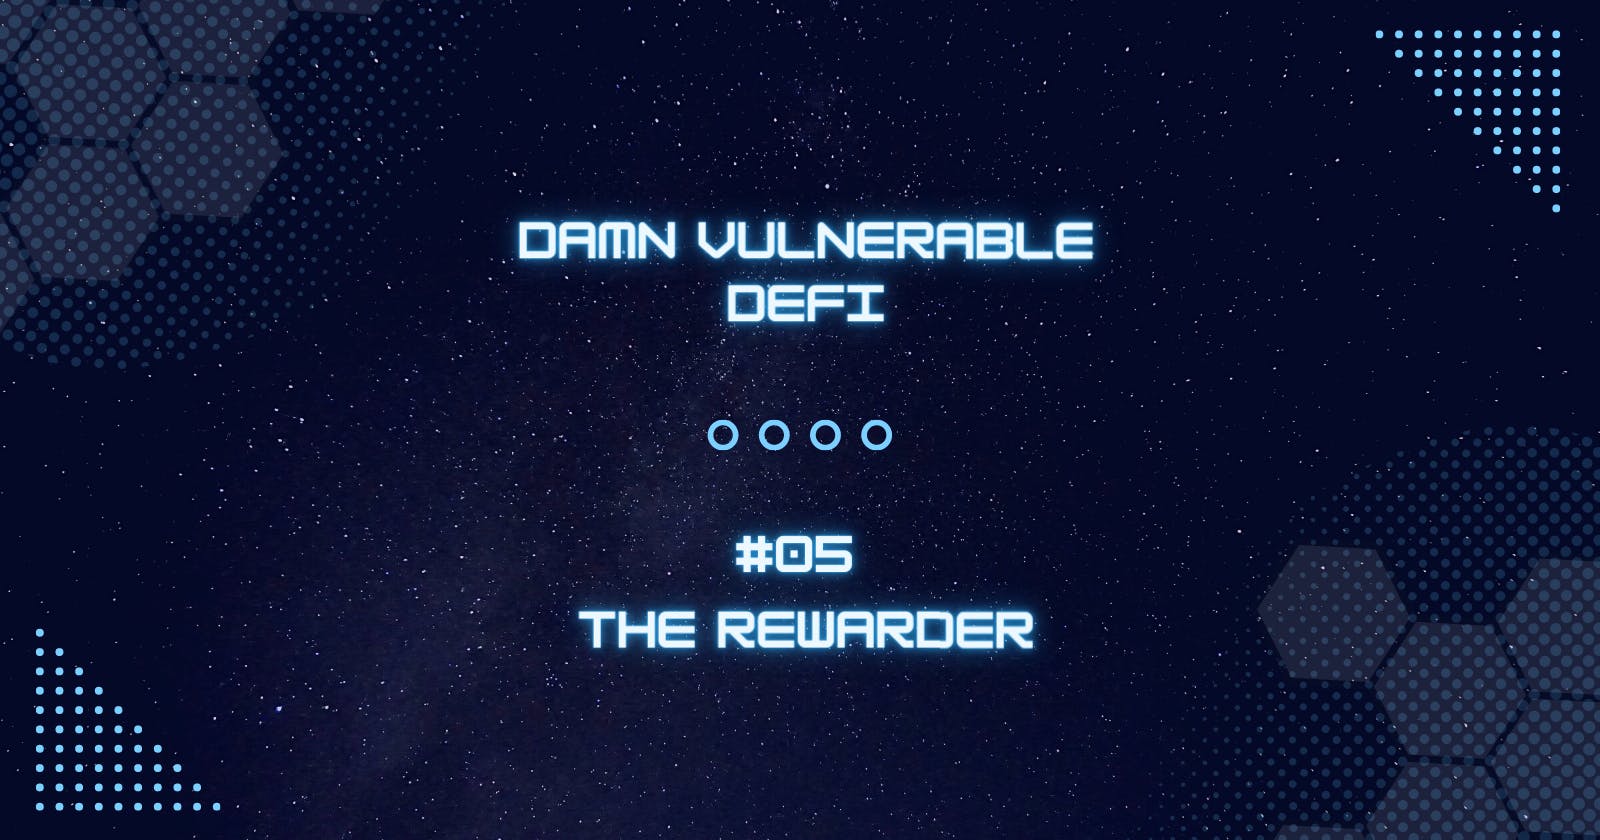 The Rewarder - Damn Vulnerable DeFi #05